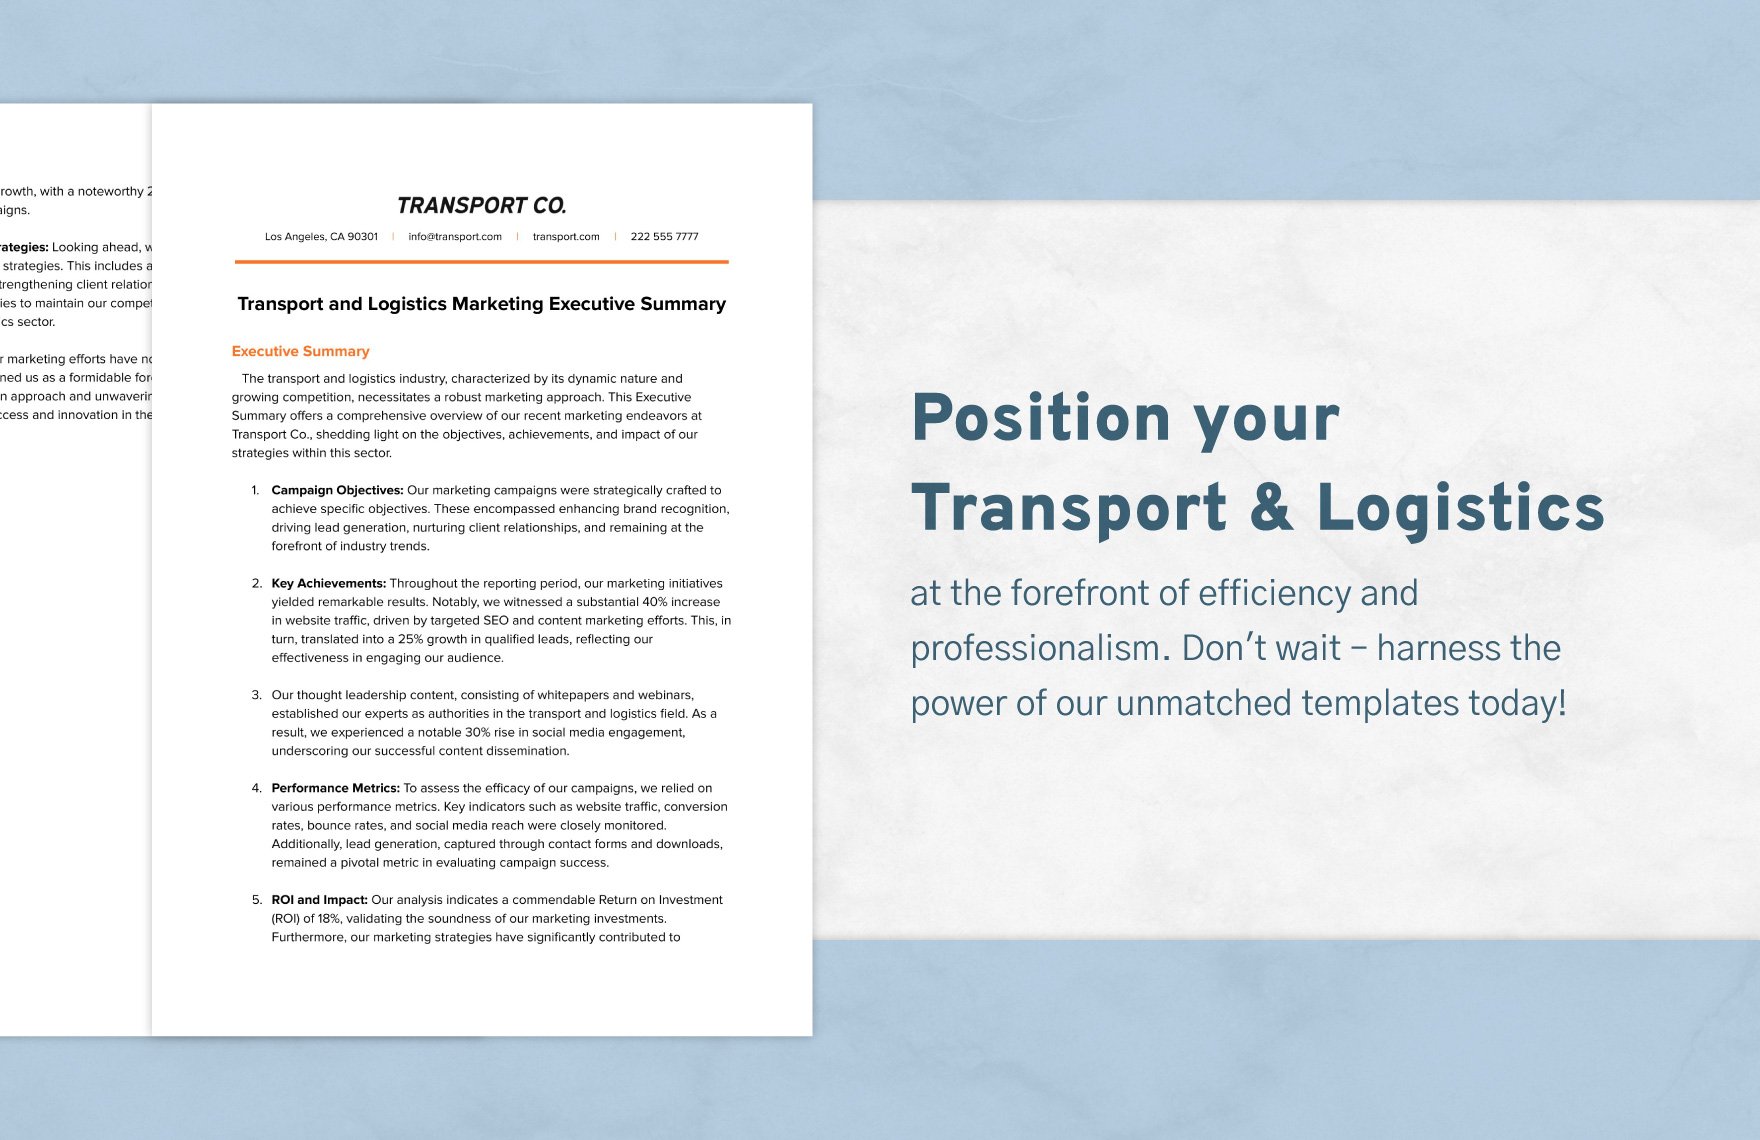 Transport and Logistics Marketing Executive Summary Template